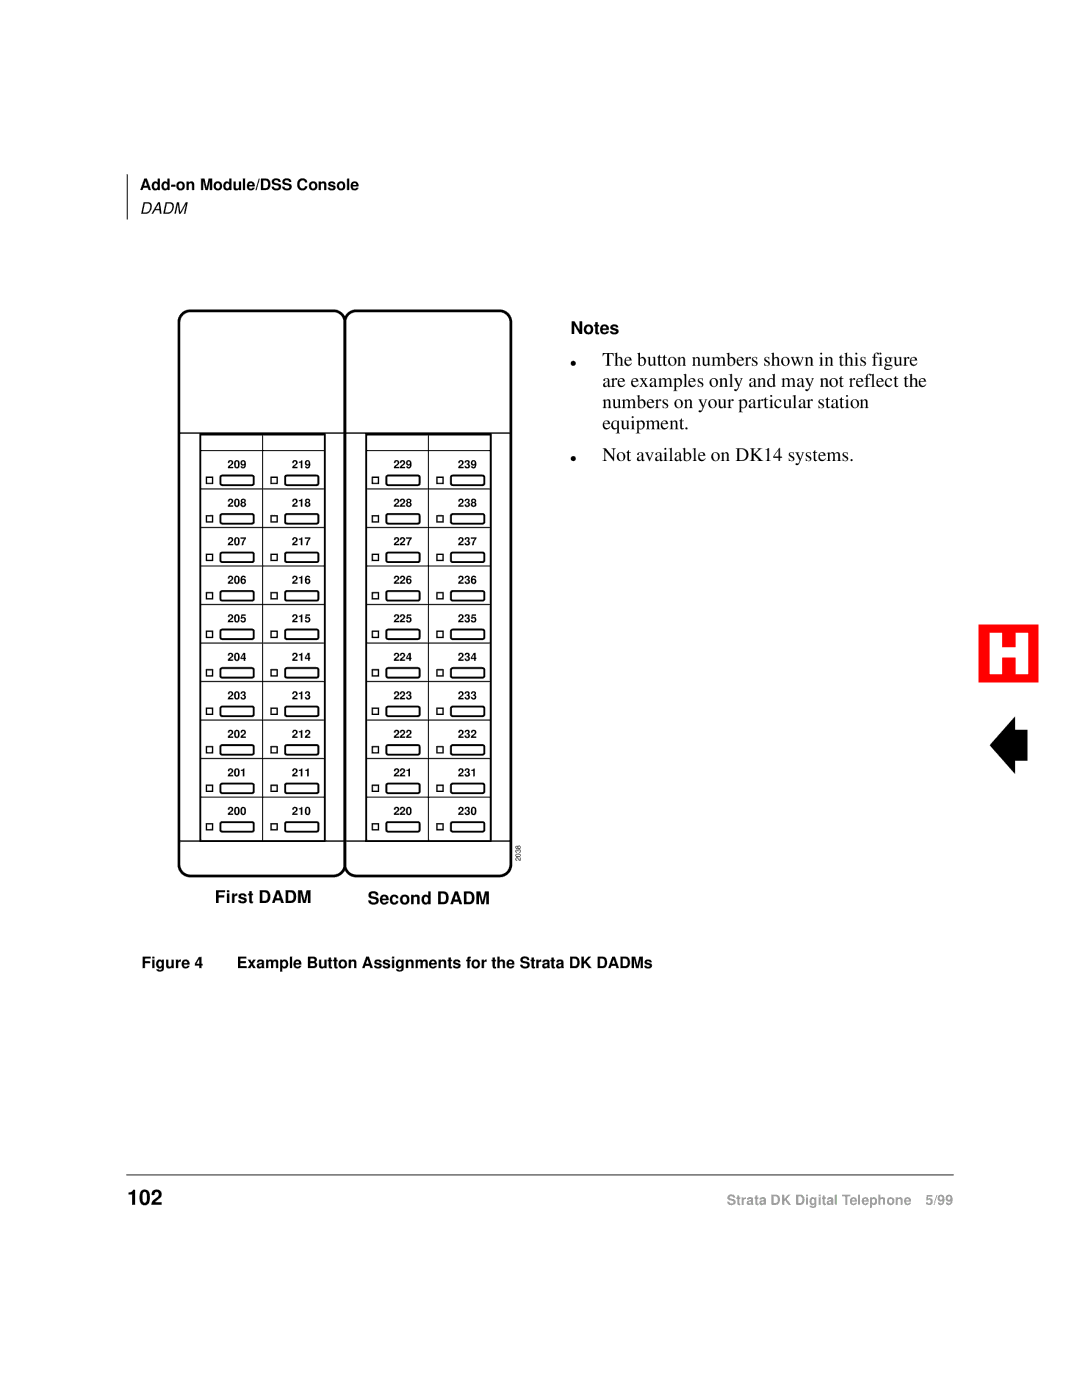 Toshiba Digital Telephone manual 102, Add-on Module/DSS Console 